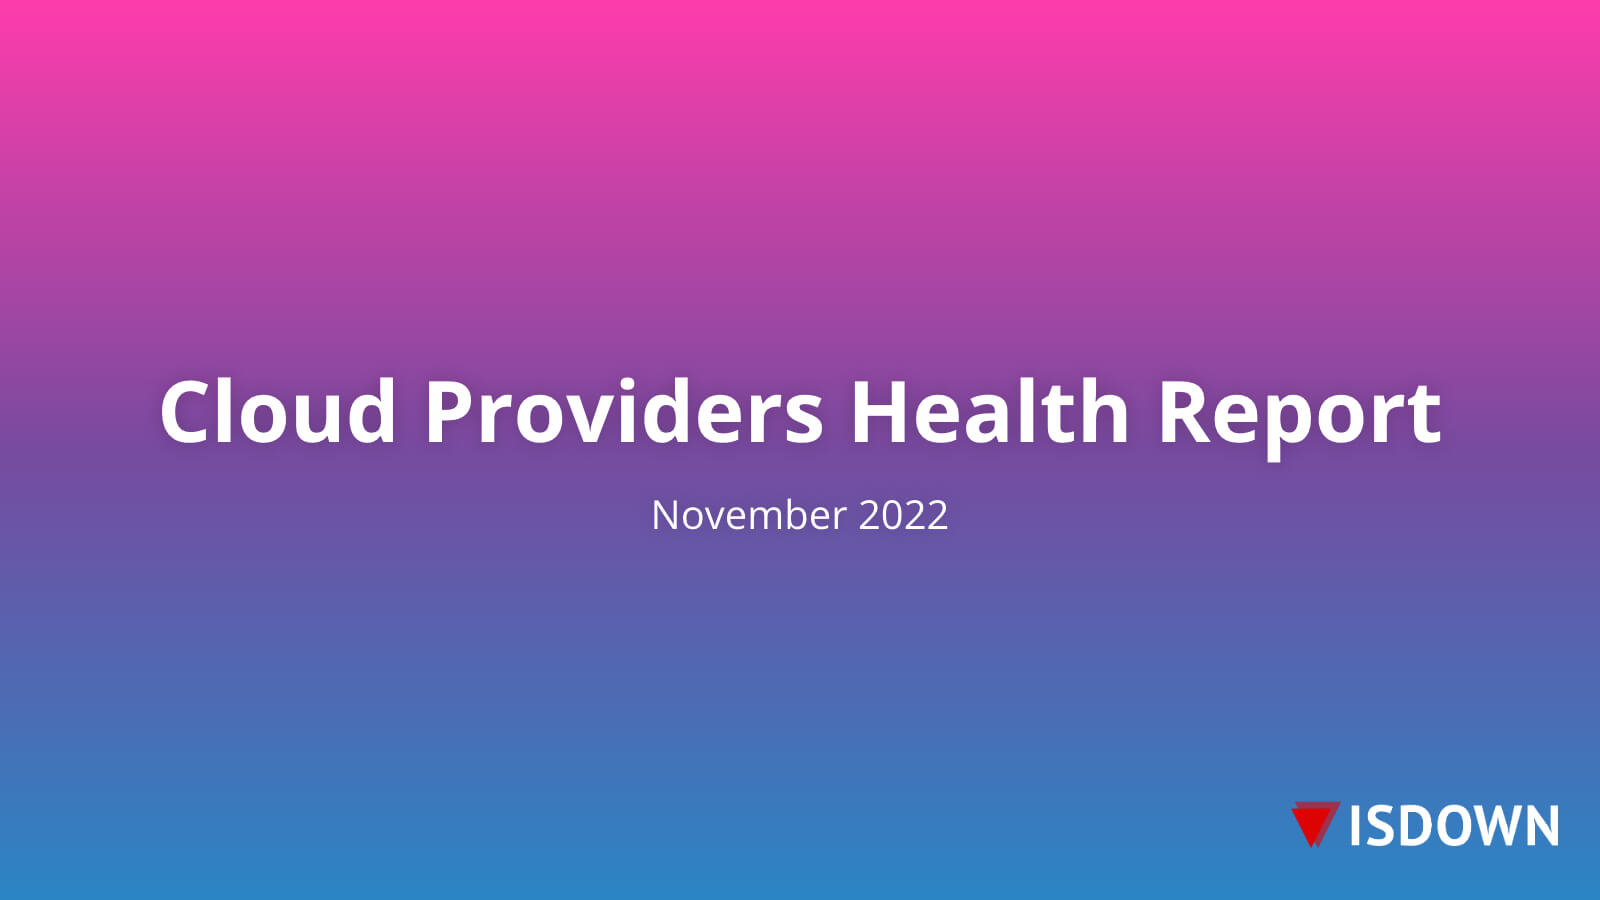 Cloud Providers Health Report - November 2022